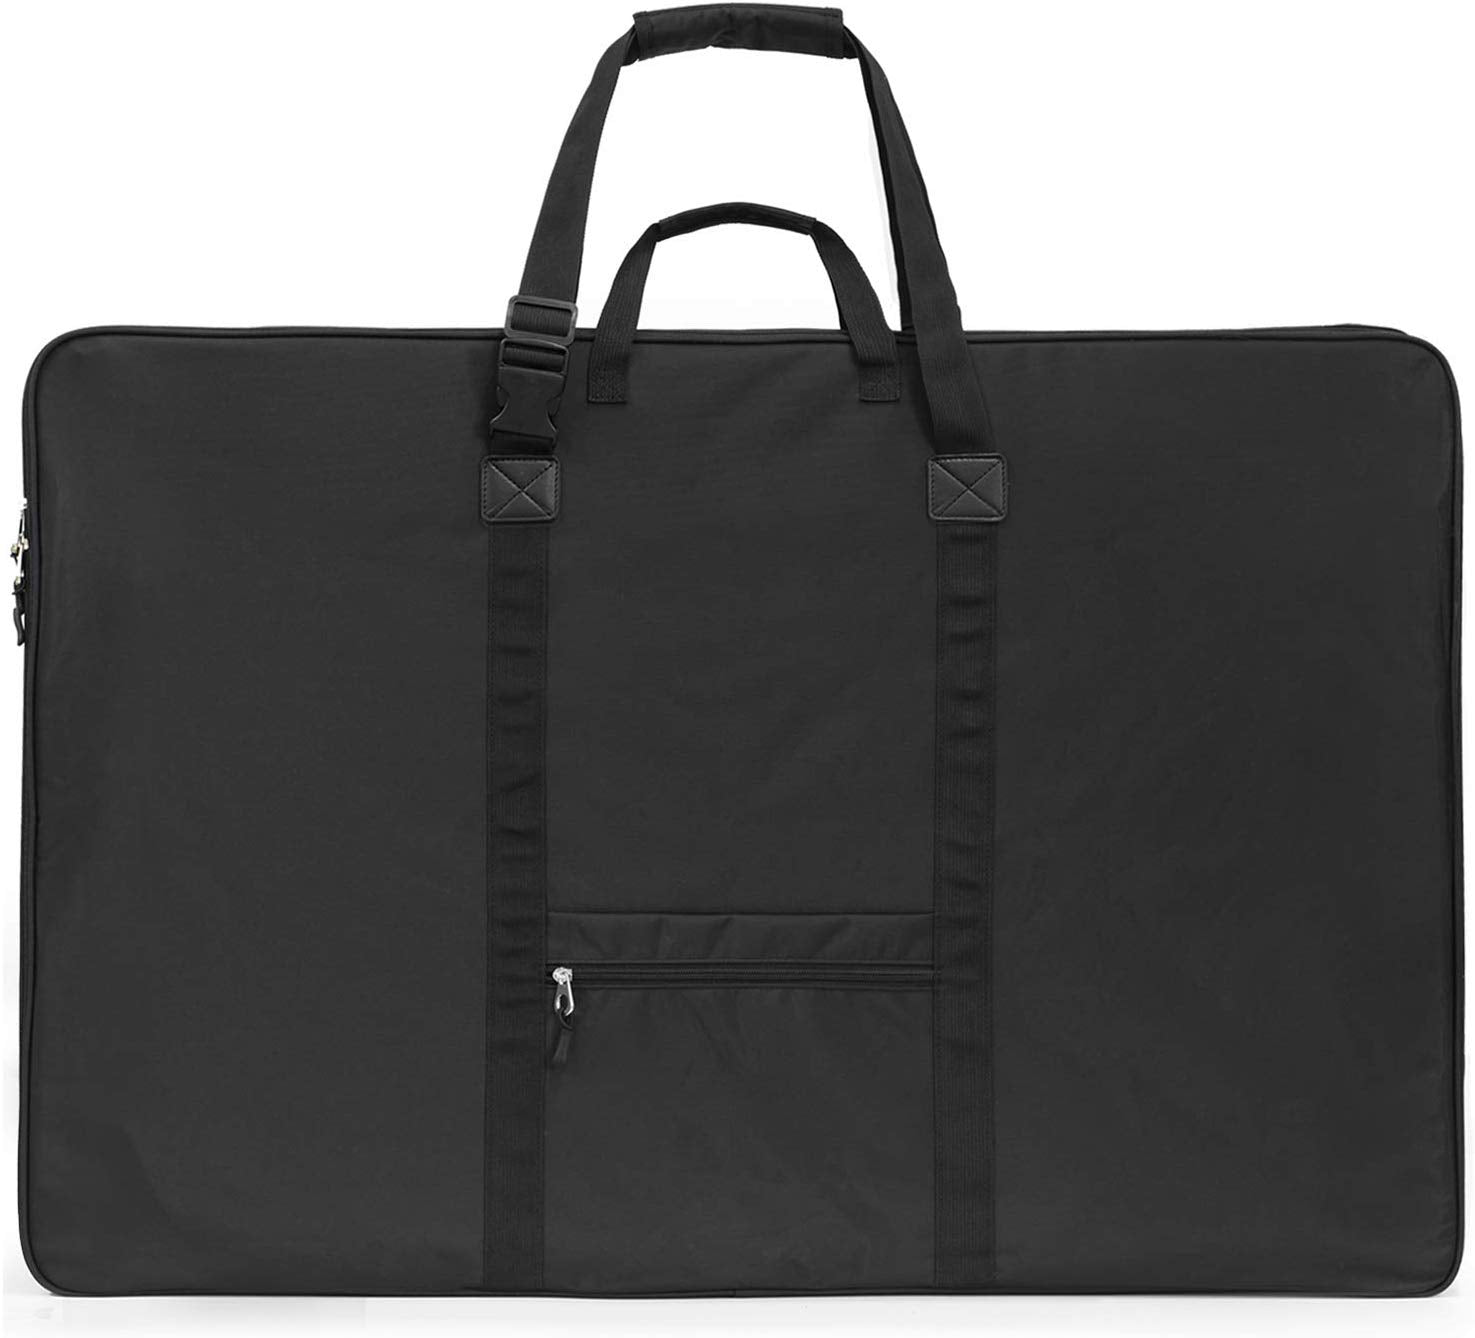  Nicpro Light Weight Art Portfolio Bag, 18x24 Black Art